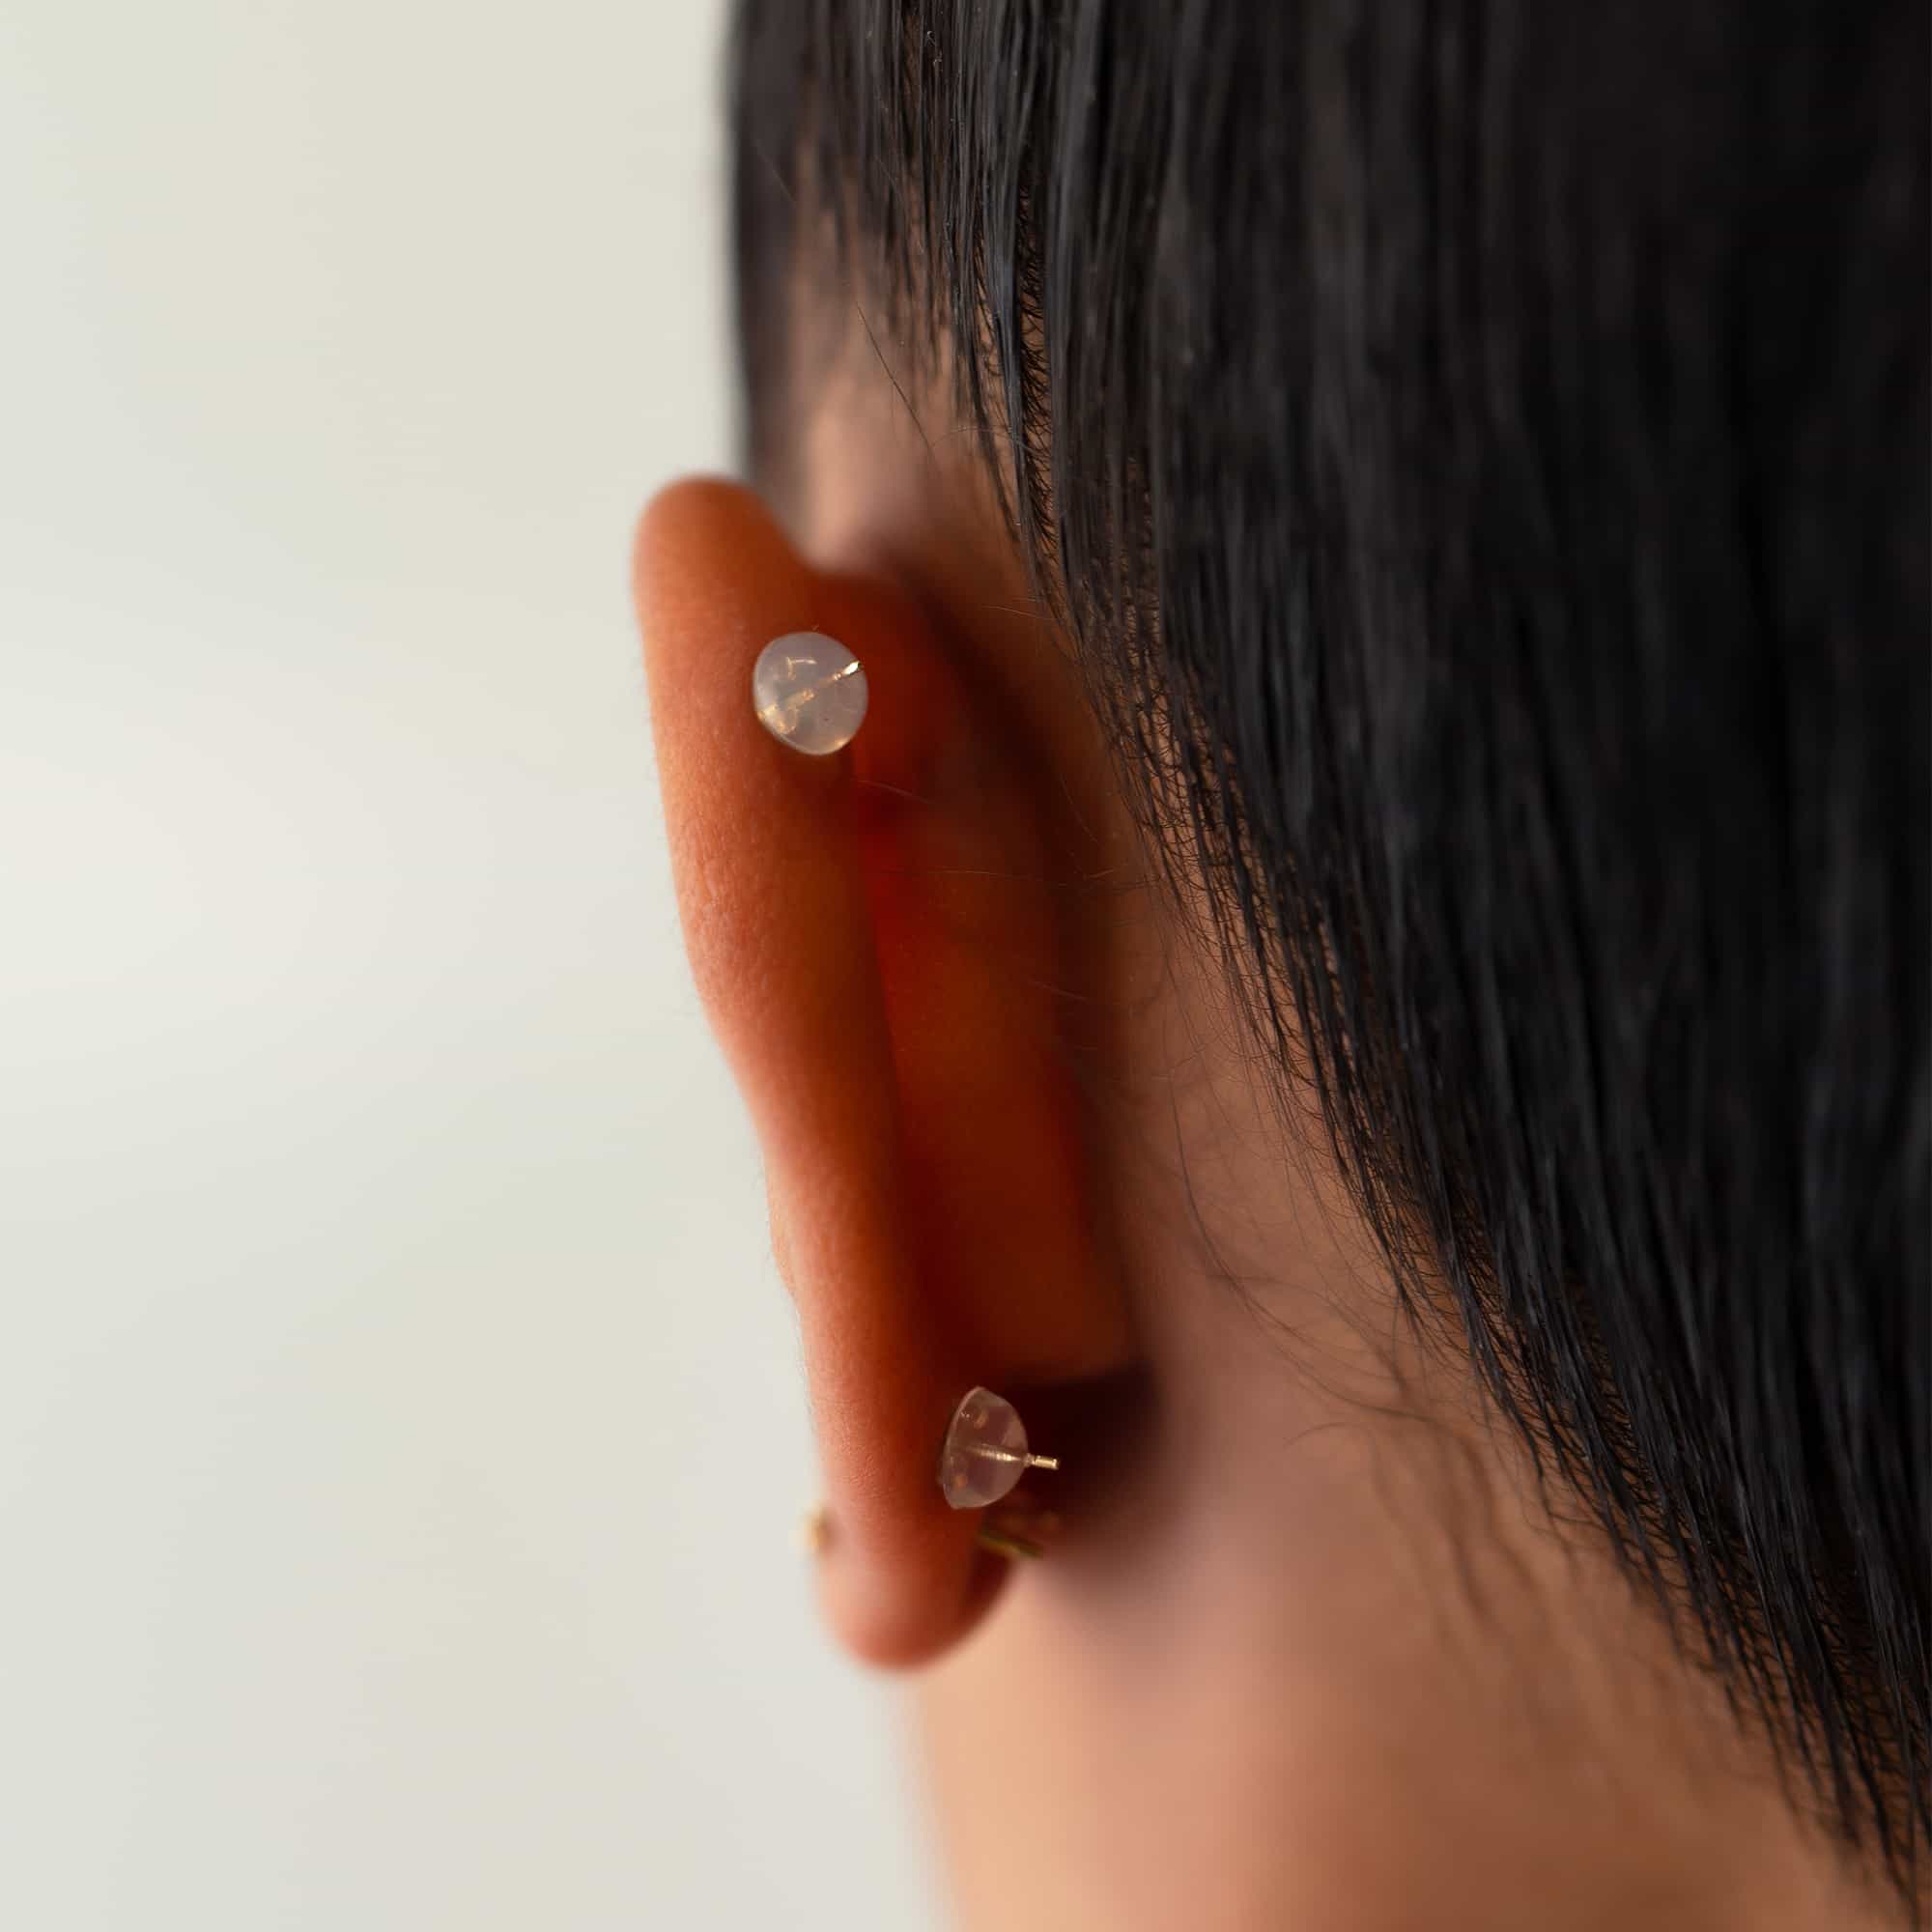 BULK 100 Pcs Silicone Rubber Earring Backs, Clear Earring Backs